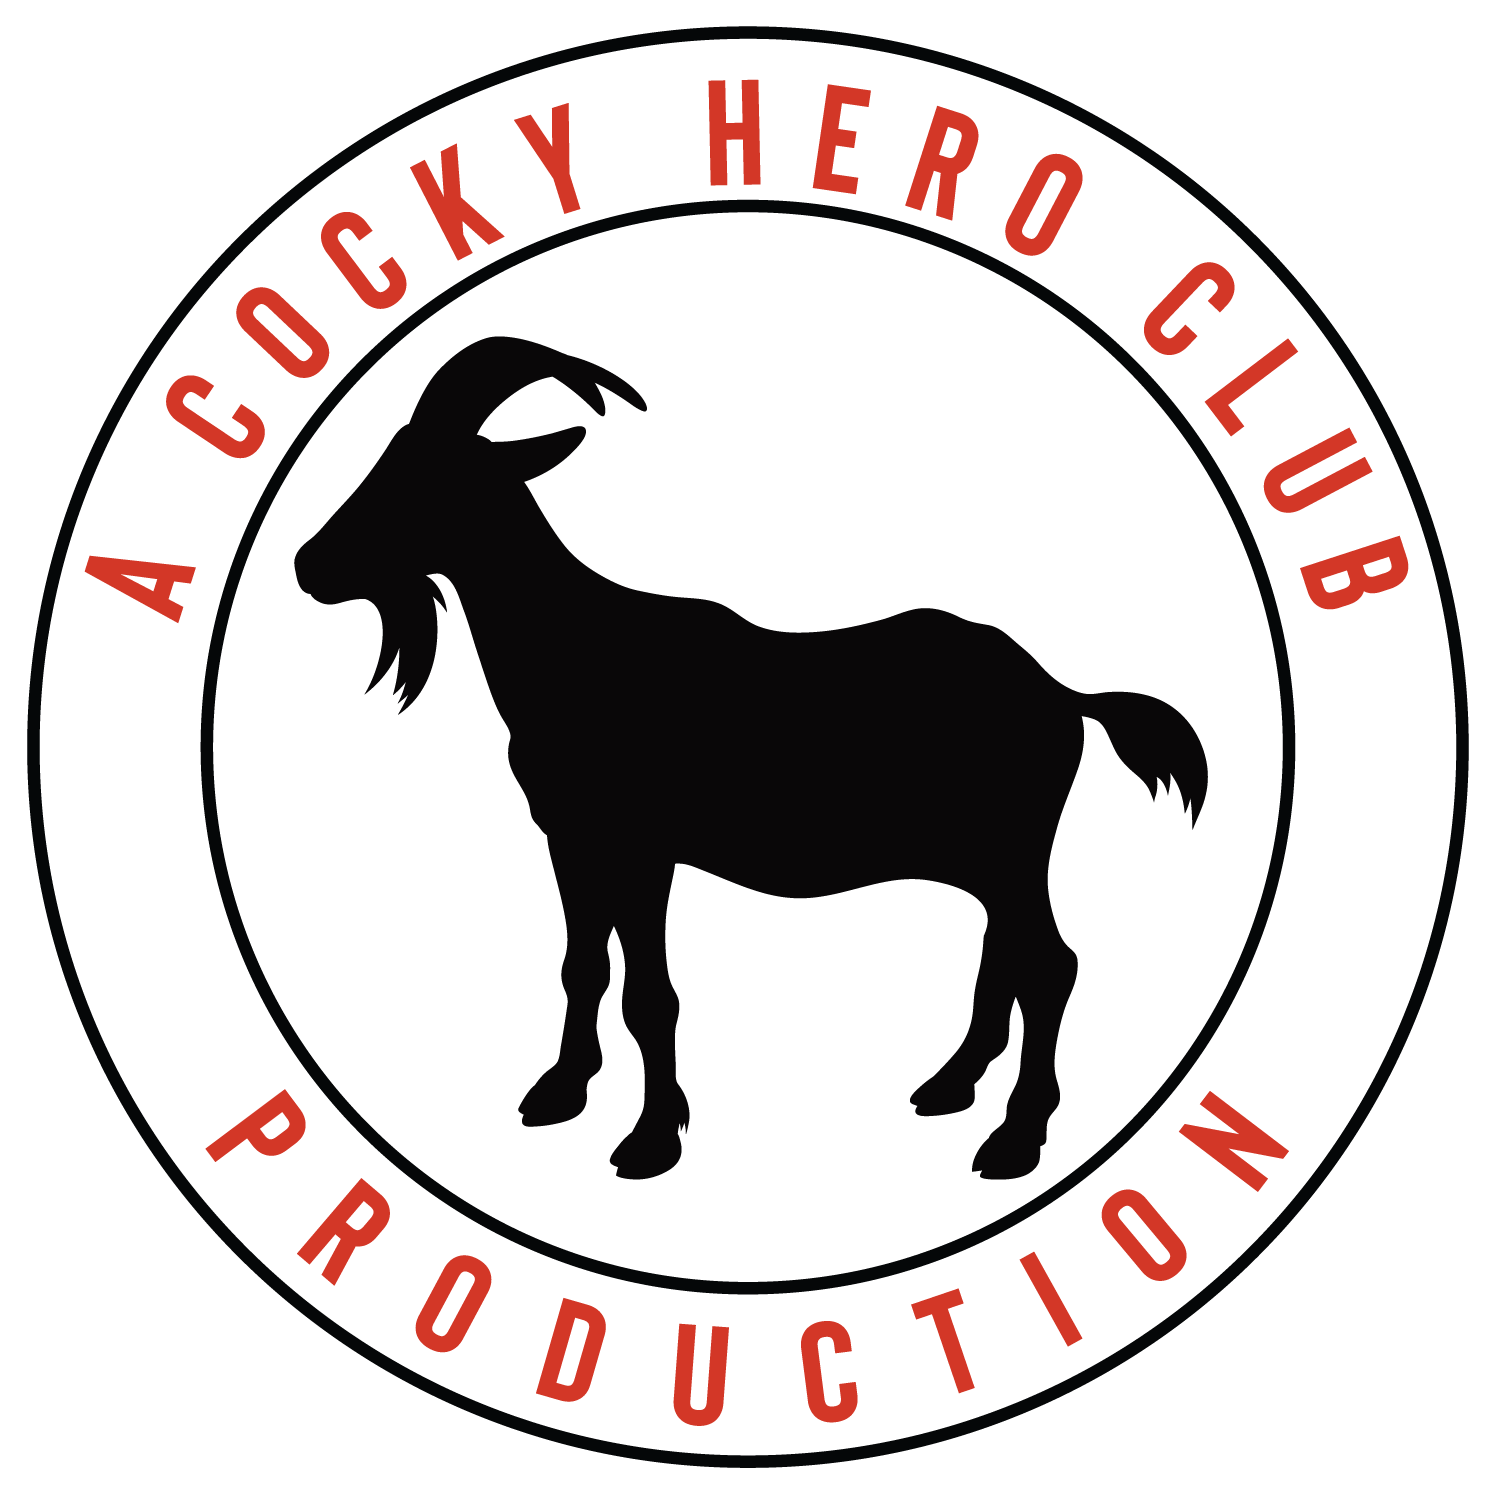 Cocky Hero Club